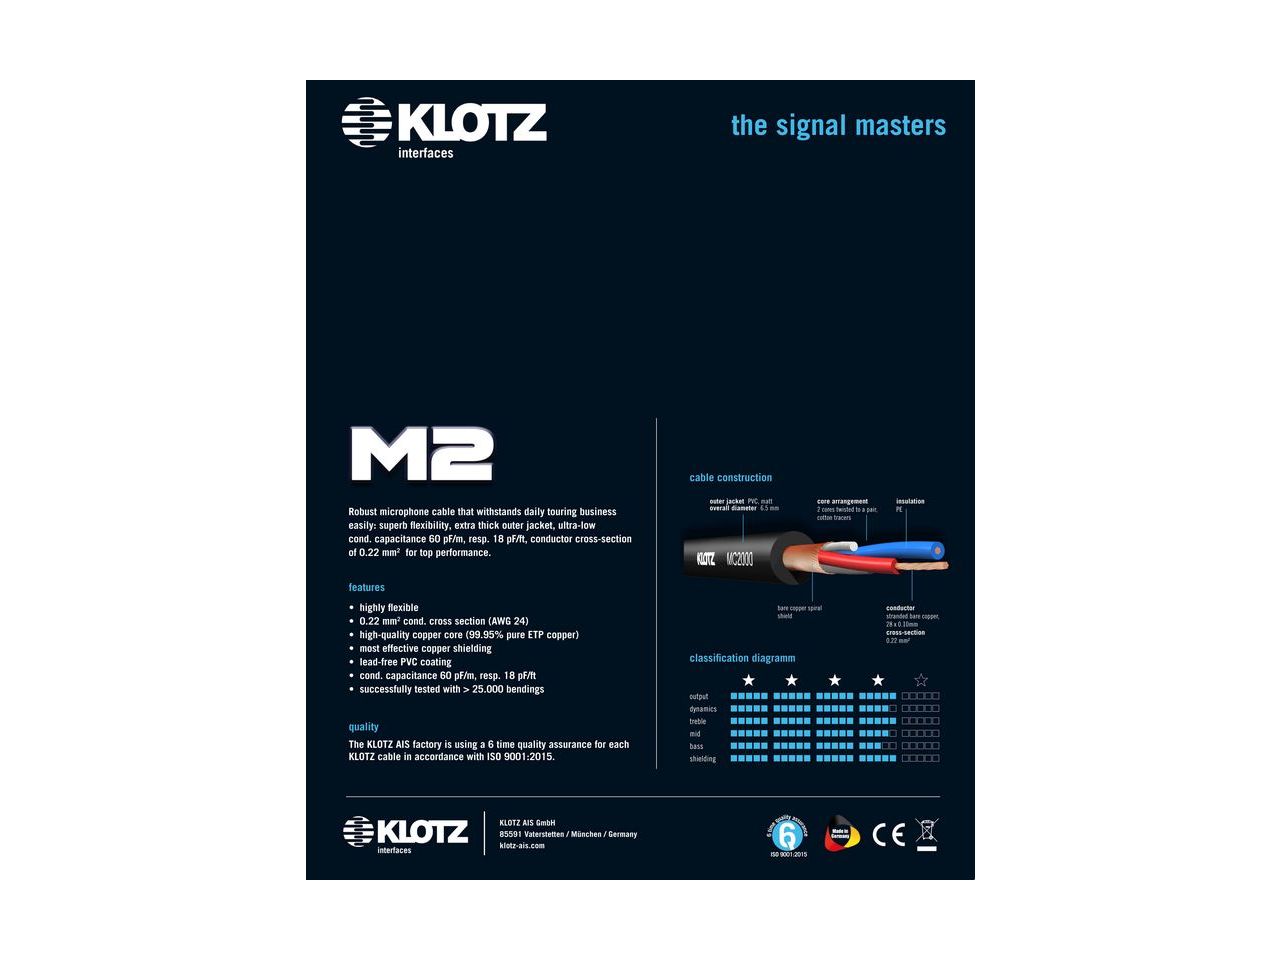 Klotz M2 High End Mikrofonkabel 5m